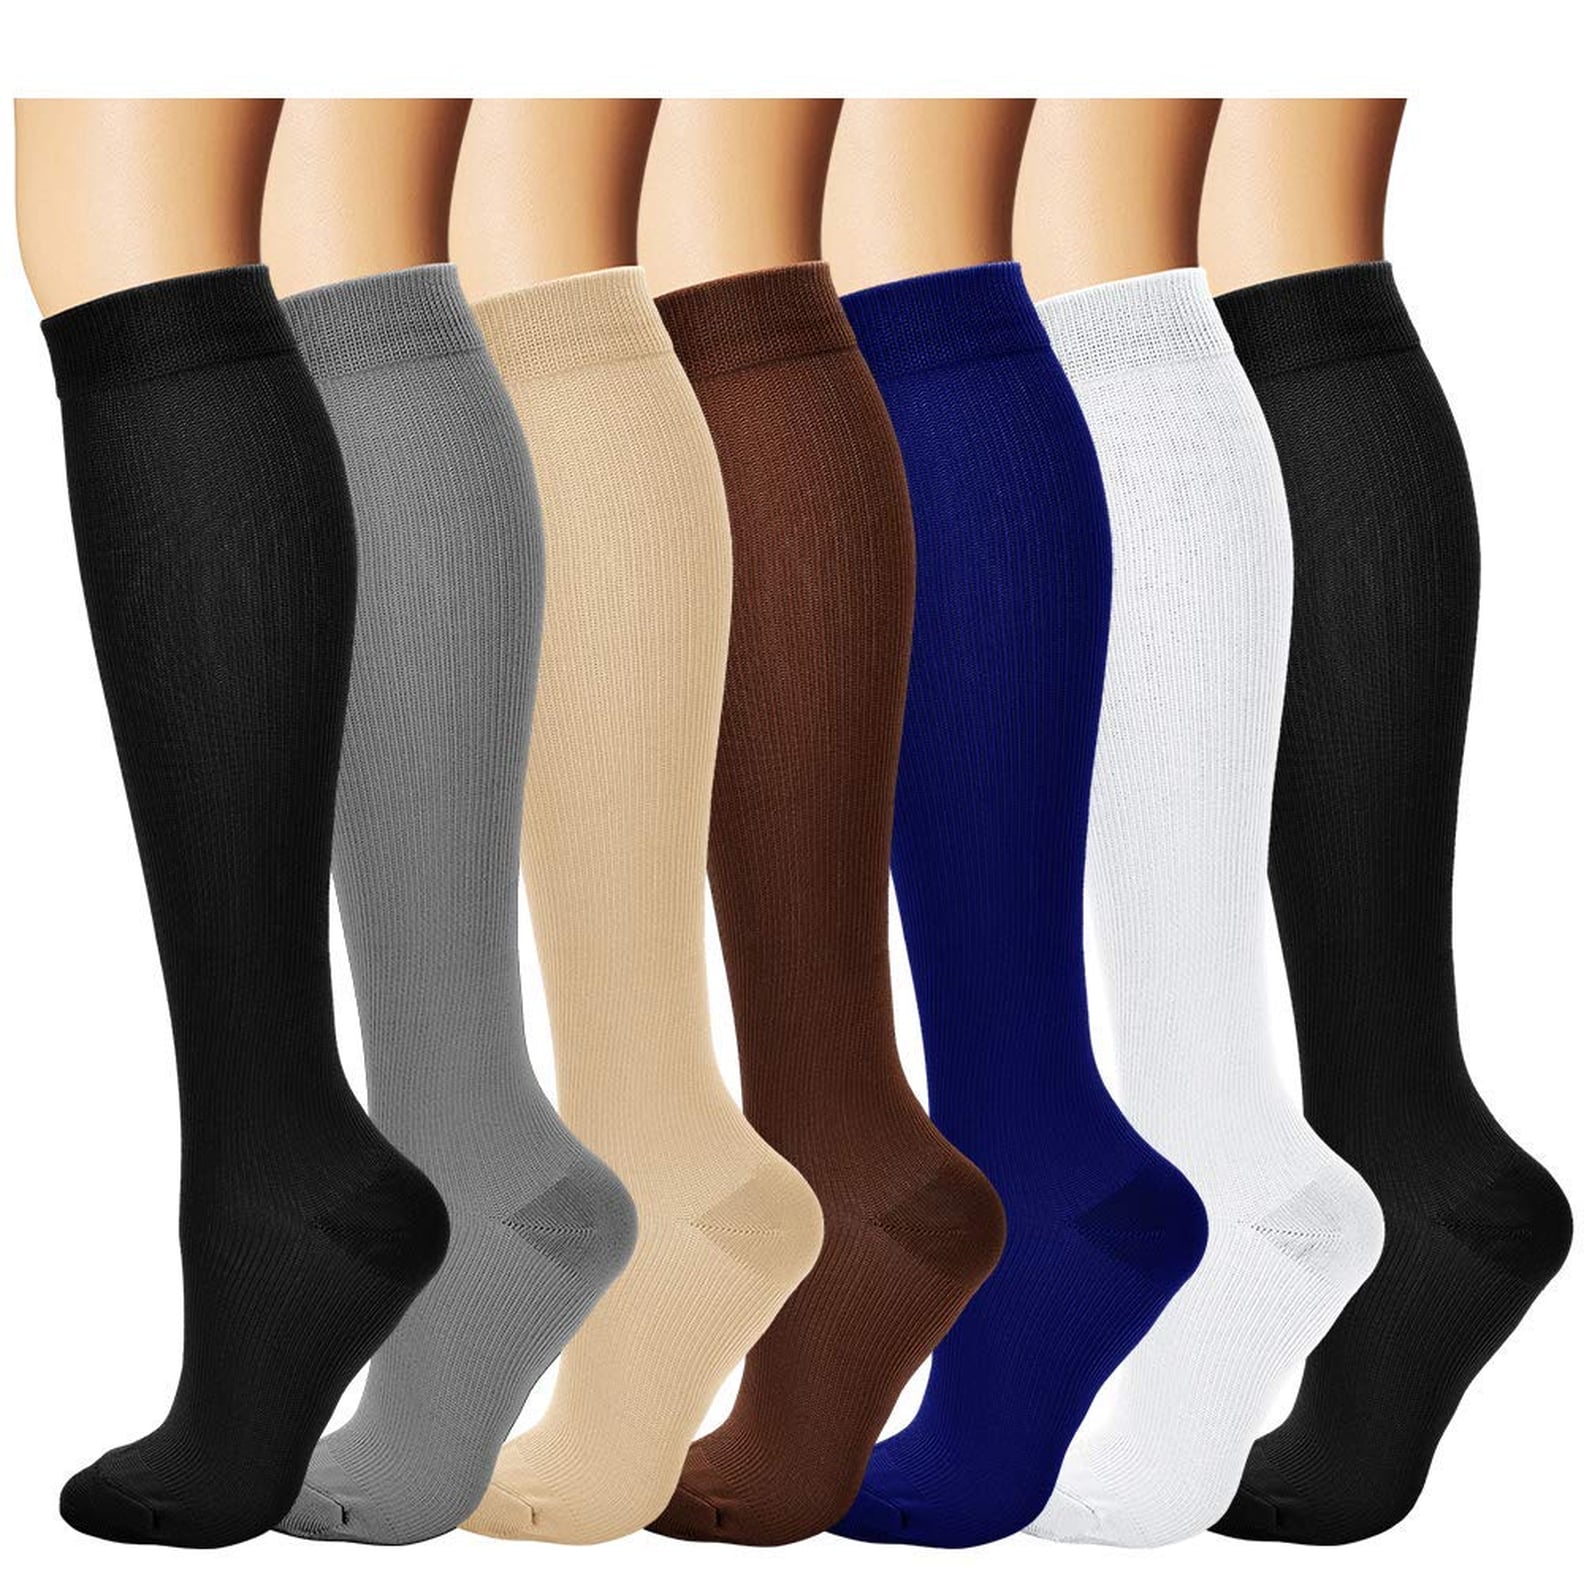 Best Compression Socks For Women on Amazon | POPSUGAR Fitness